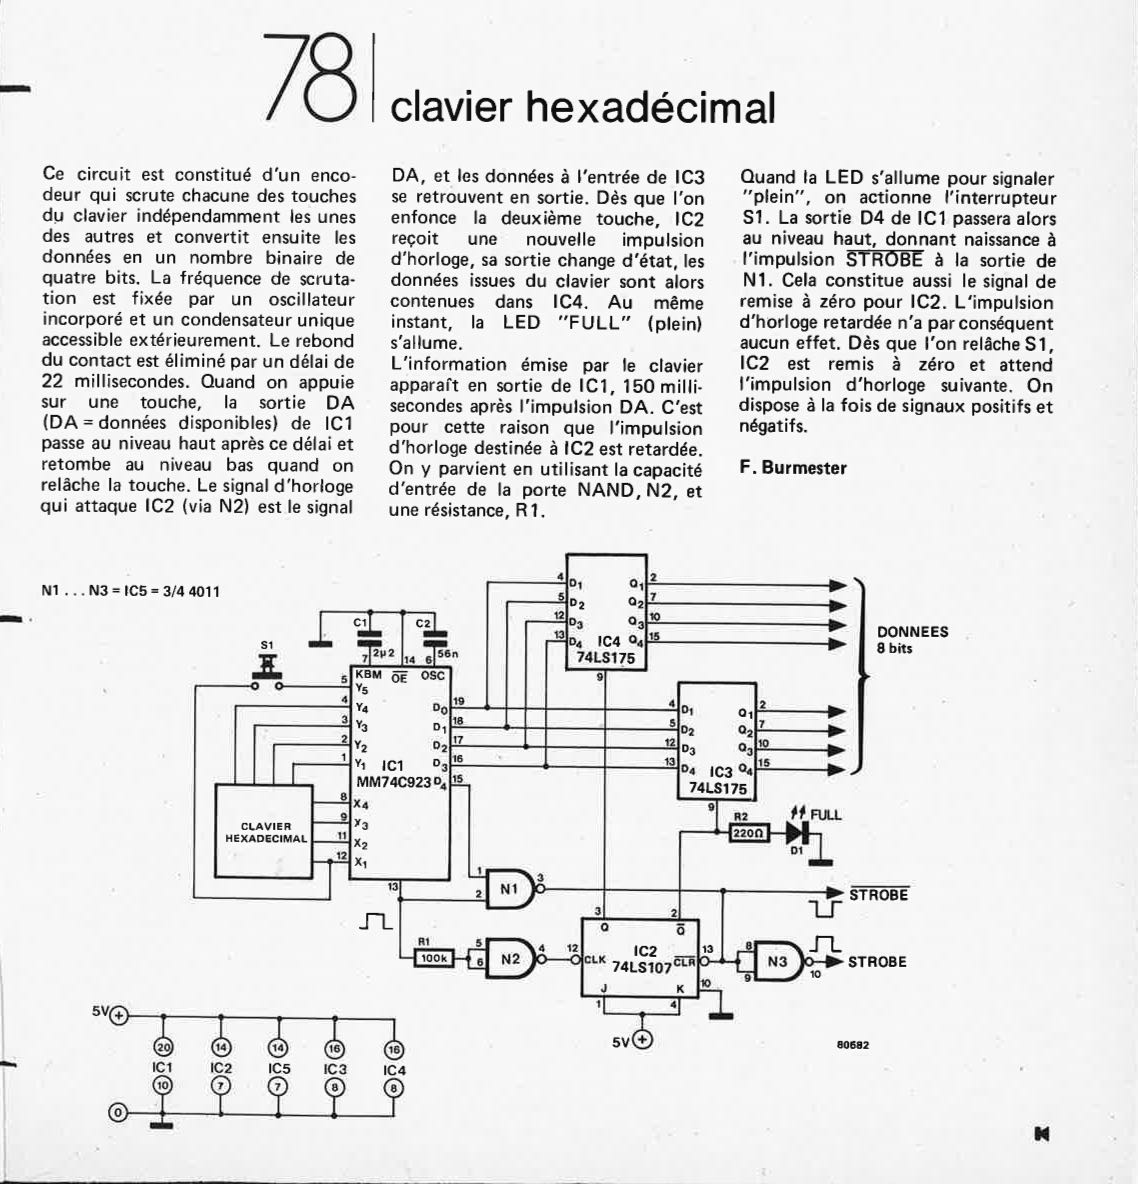 Clavier hexadécimal